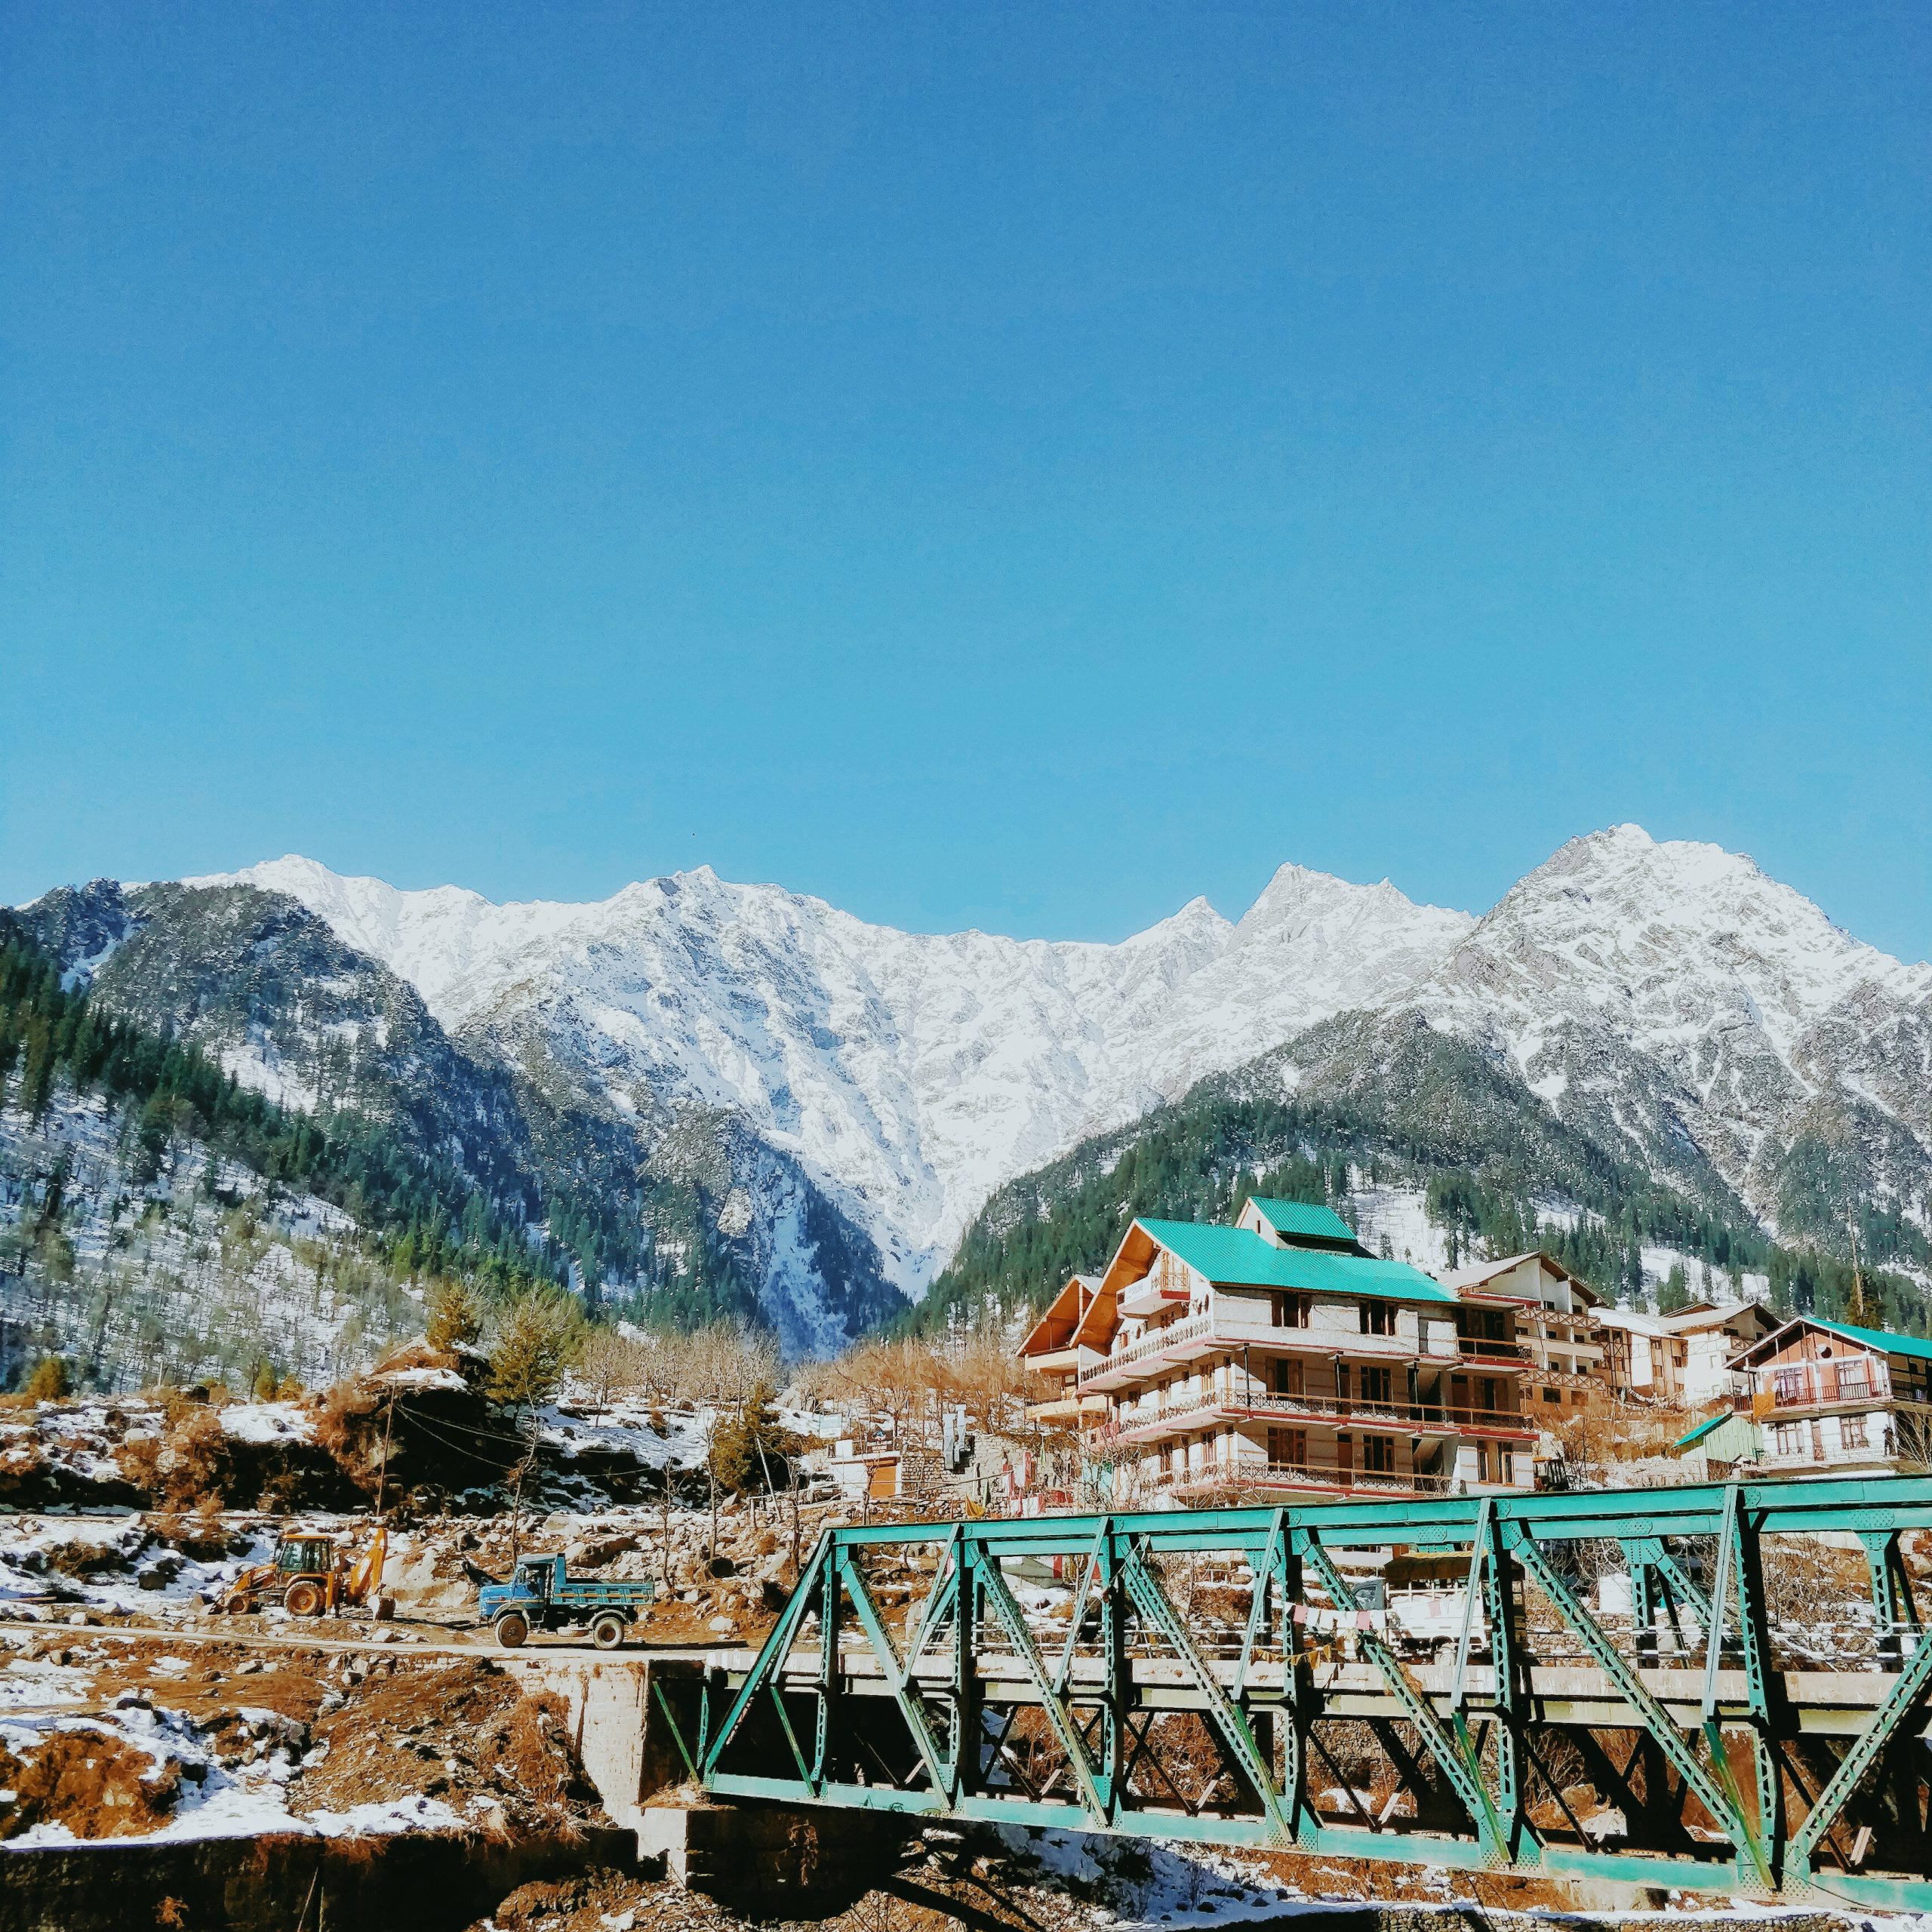 Day 2: Shimla Excursion and Kufri Visit